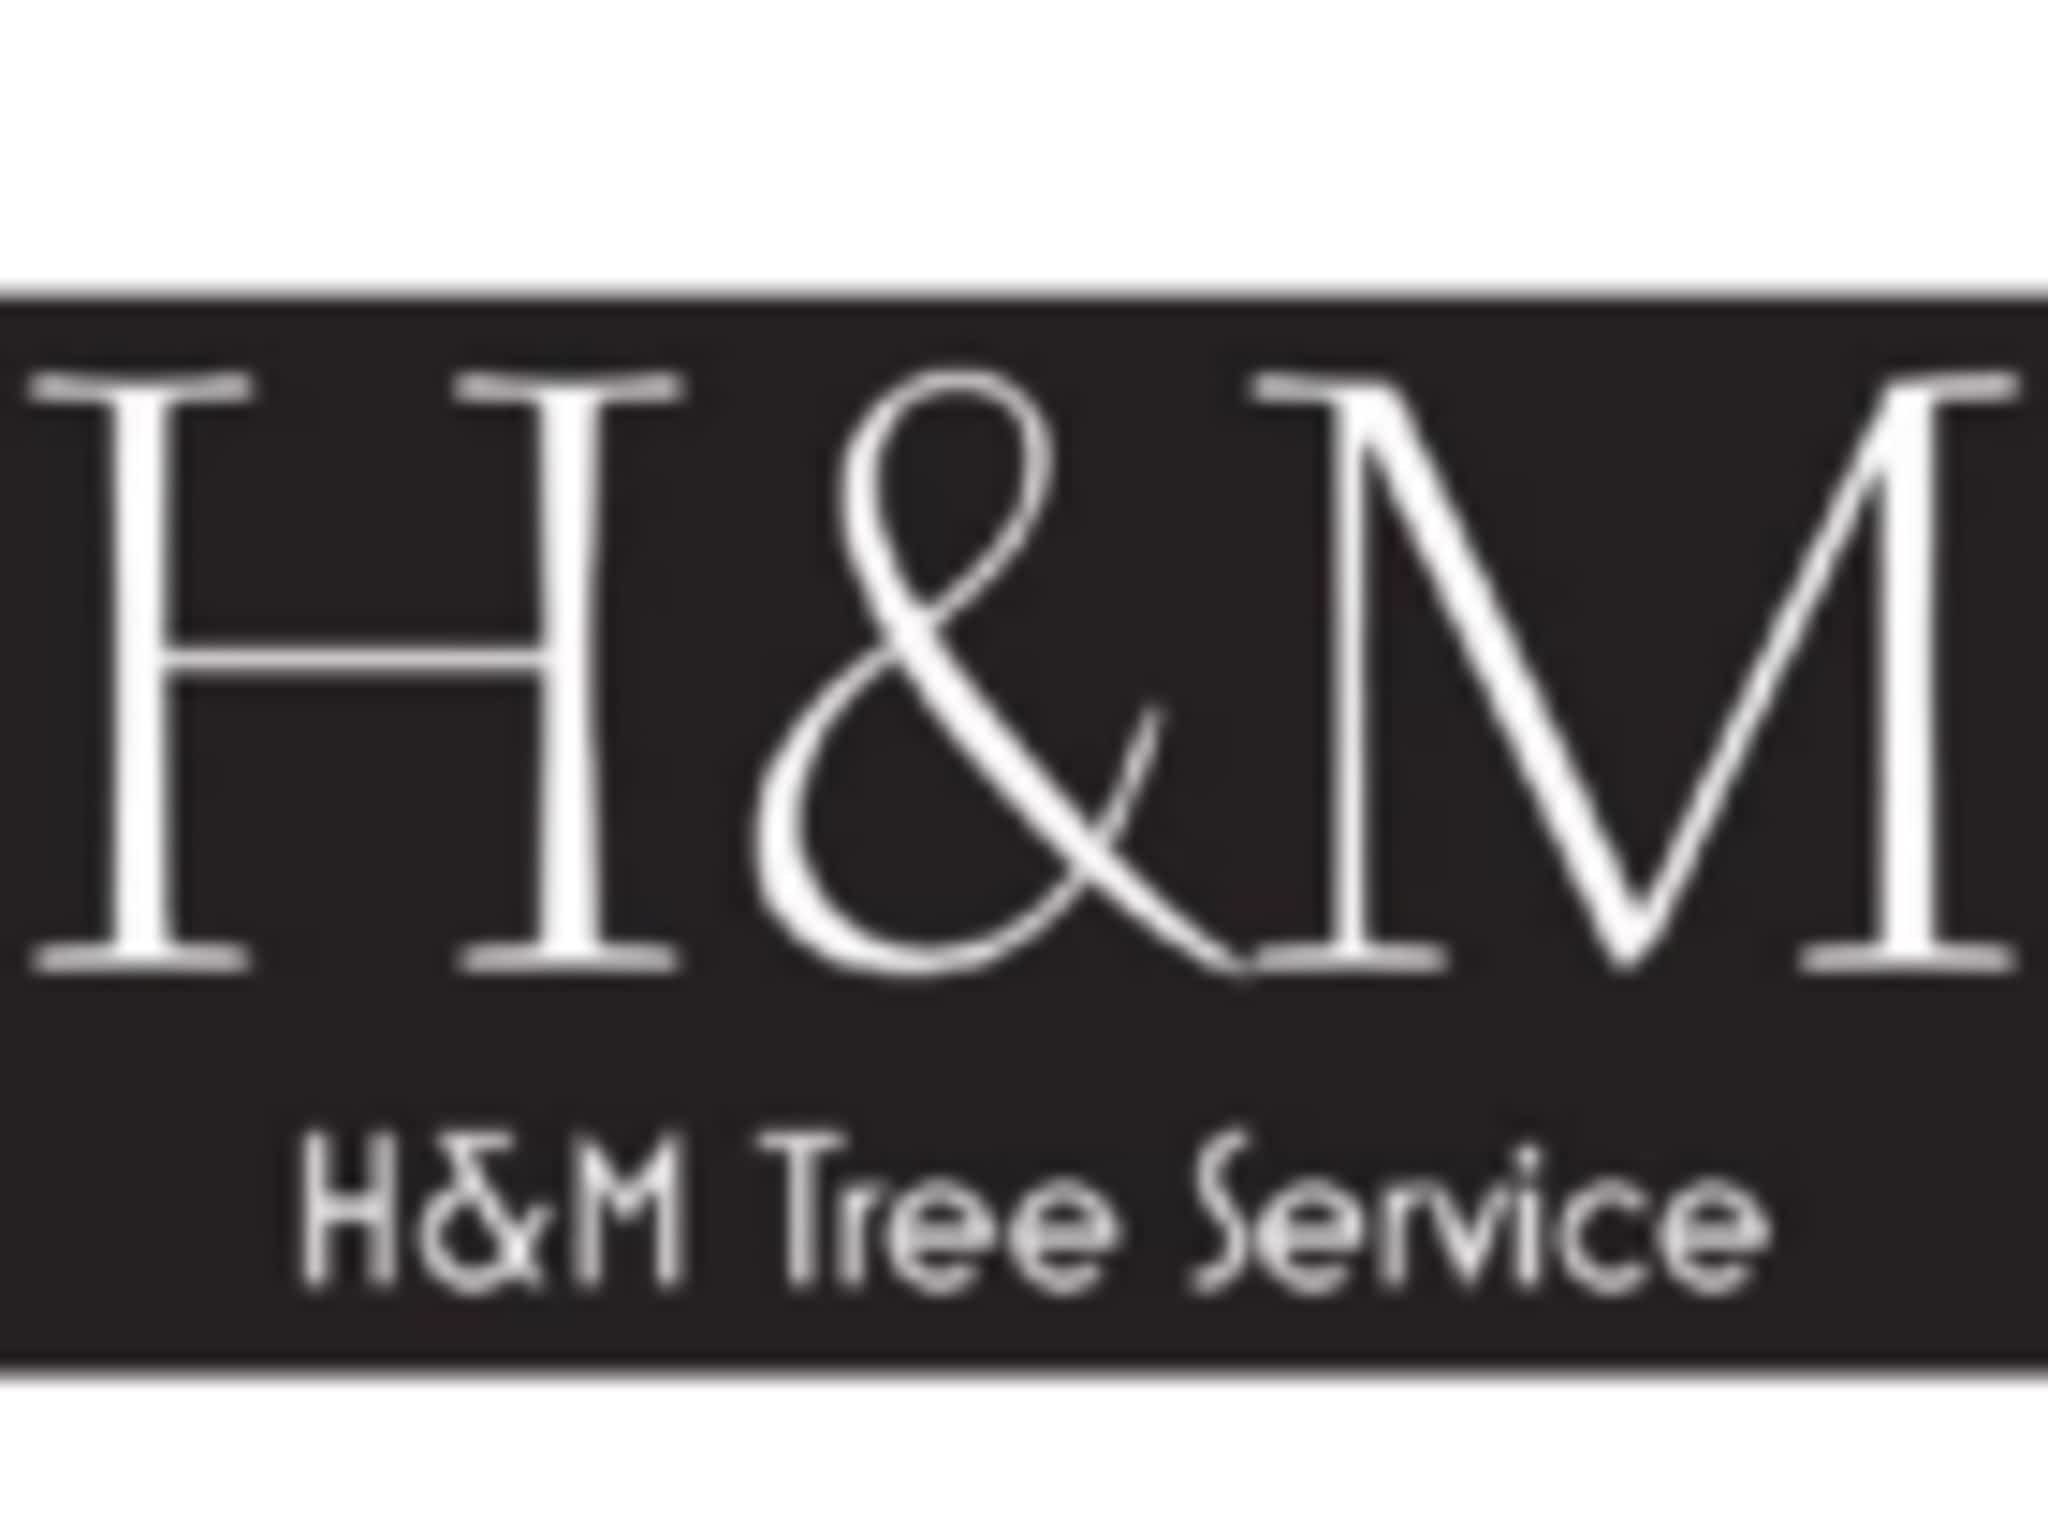 photo H&M Tree Service - Kingston